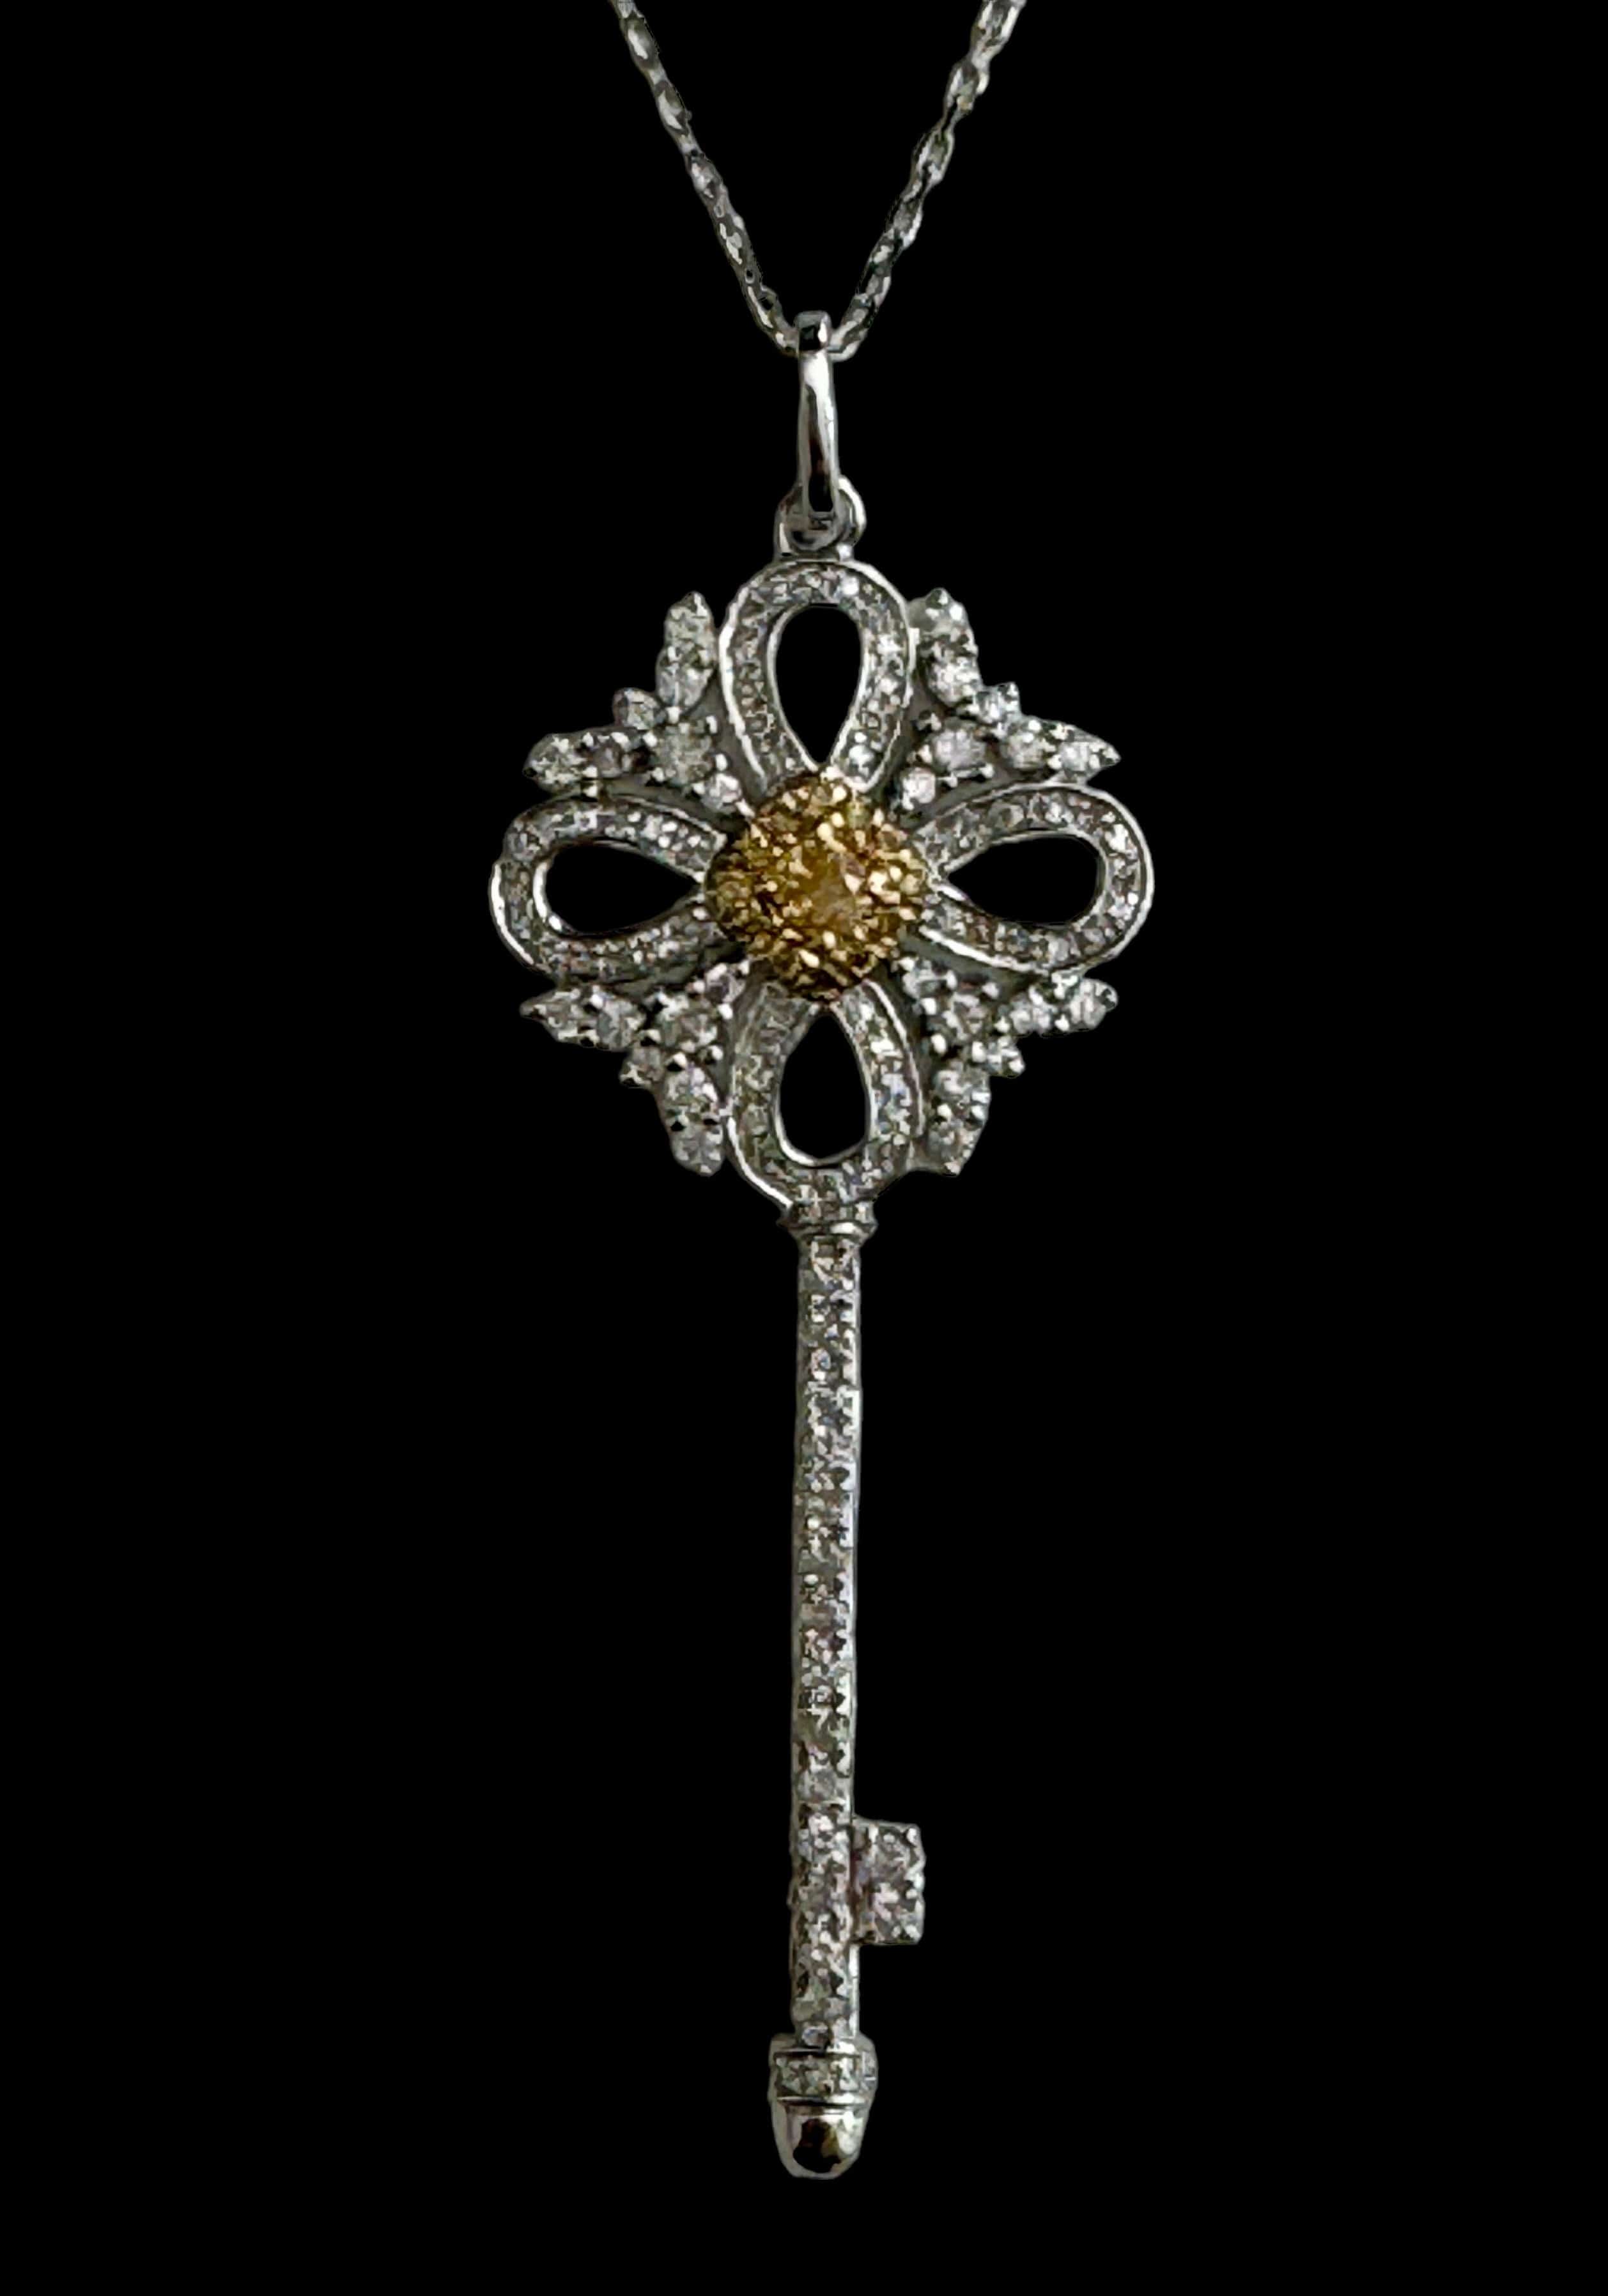 Luxury Promise Key Shaped Diamond Pendant with Inset Yellow Diamond Necklace